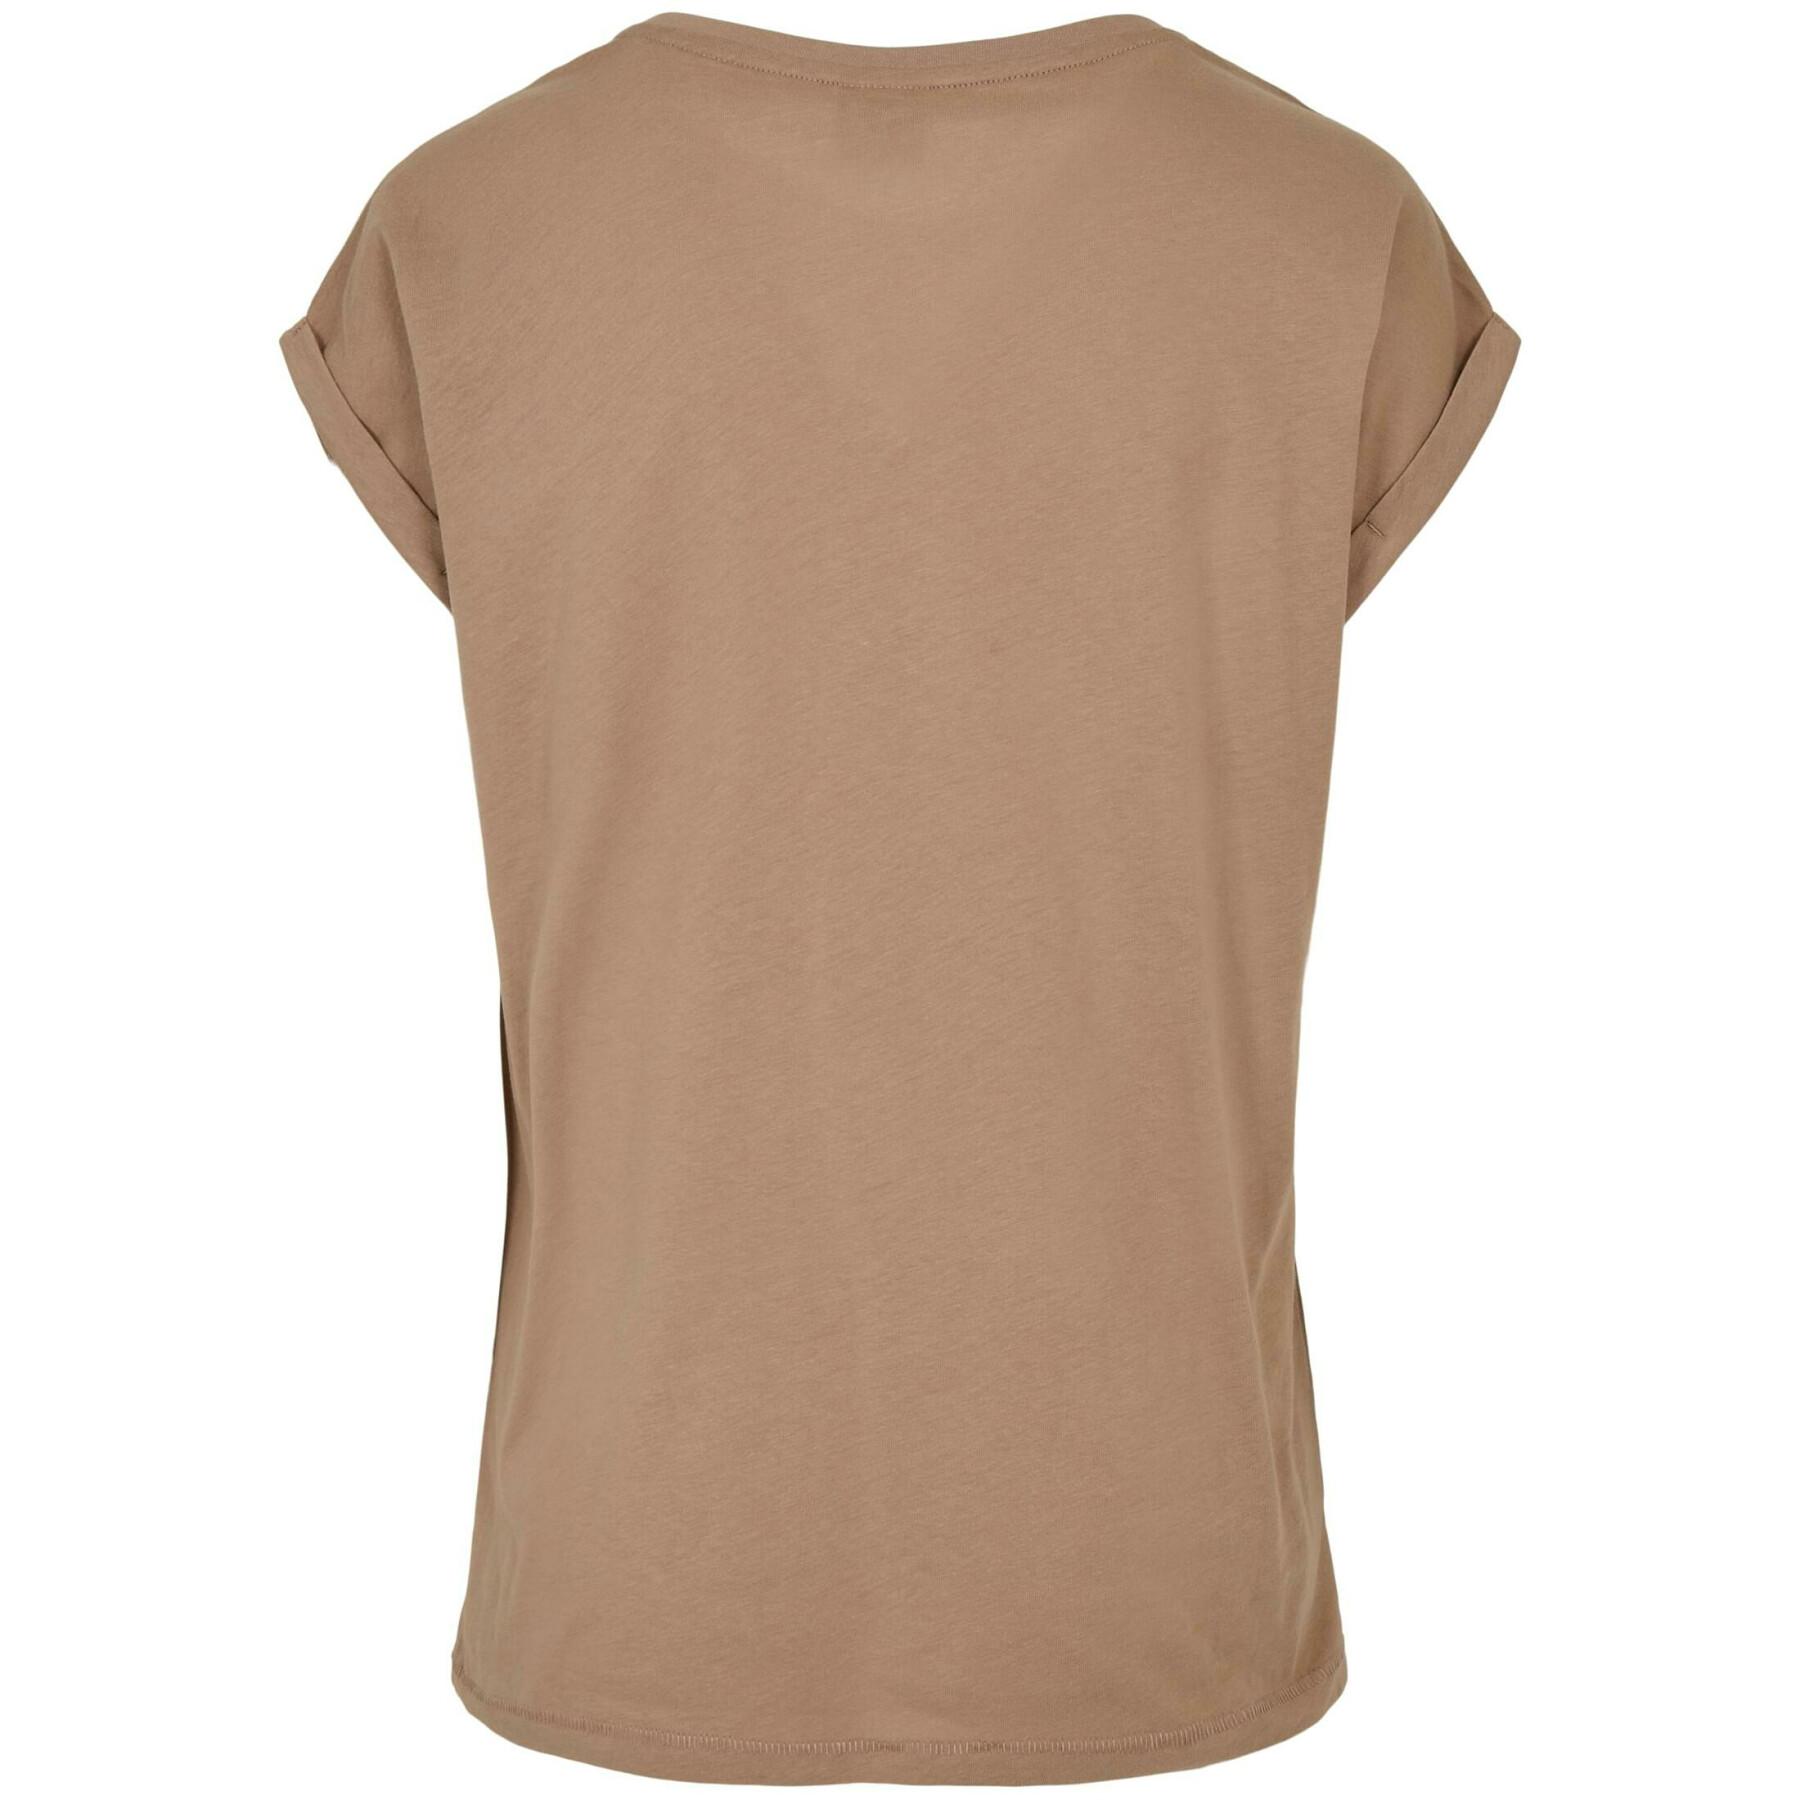 T-shirt femme Urban Classics Extended Shoulder